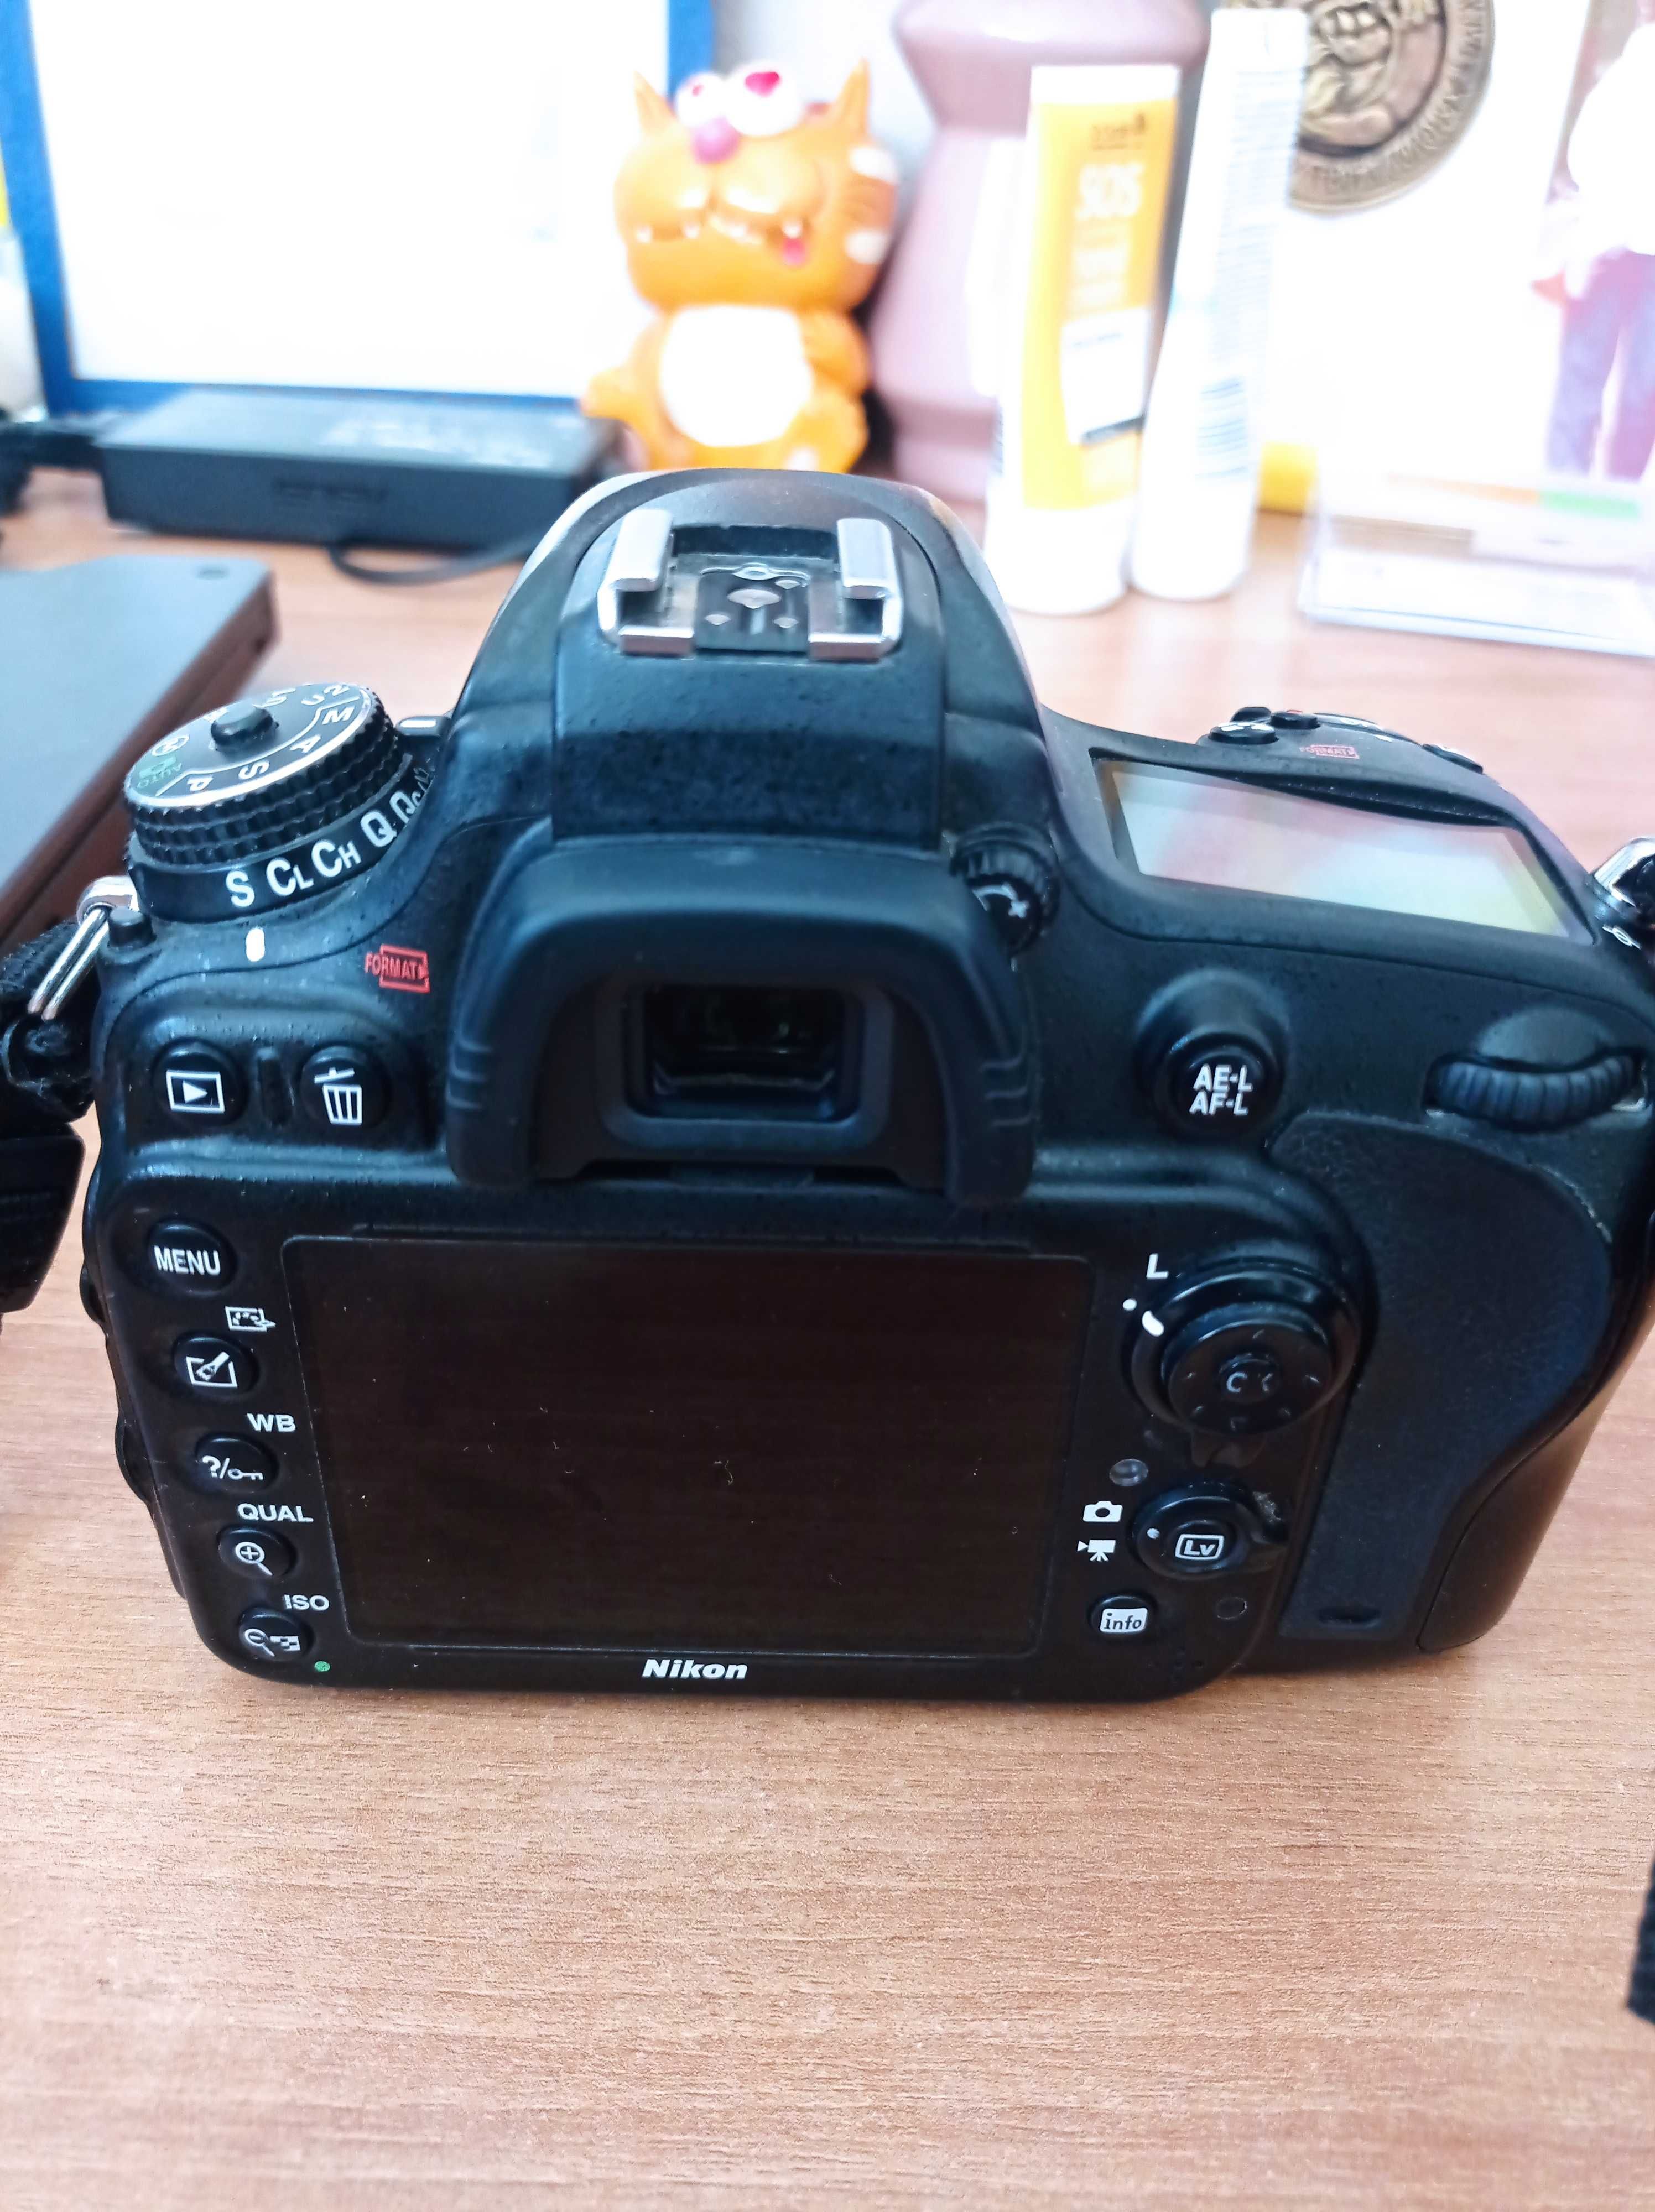 Nikon D610 + Sigma 35 mm 1.4 Art